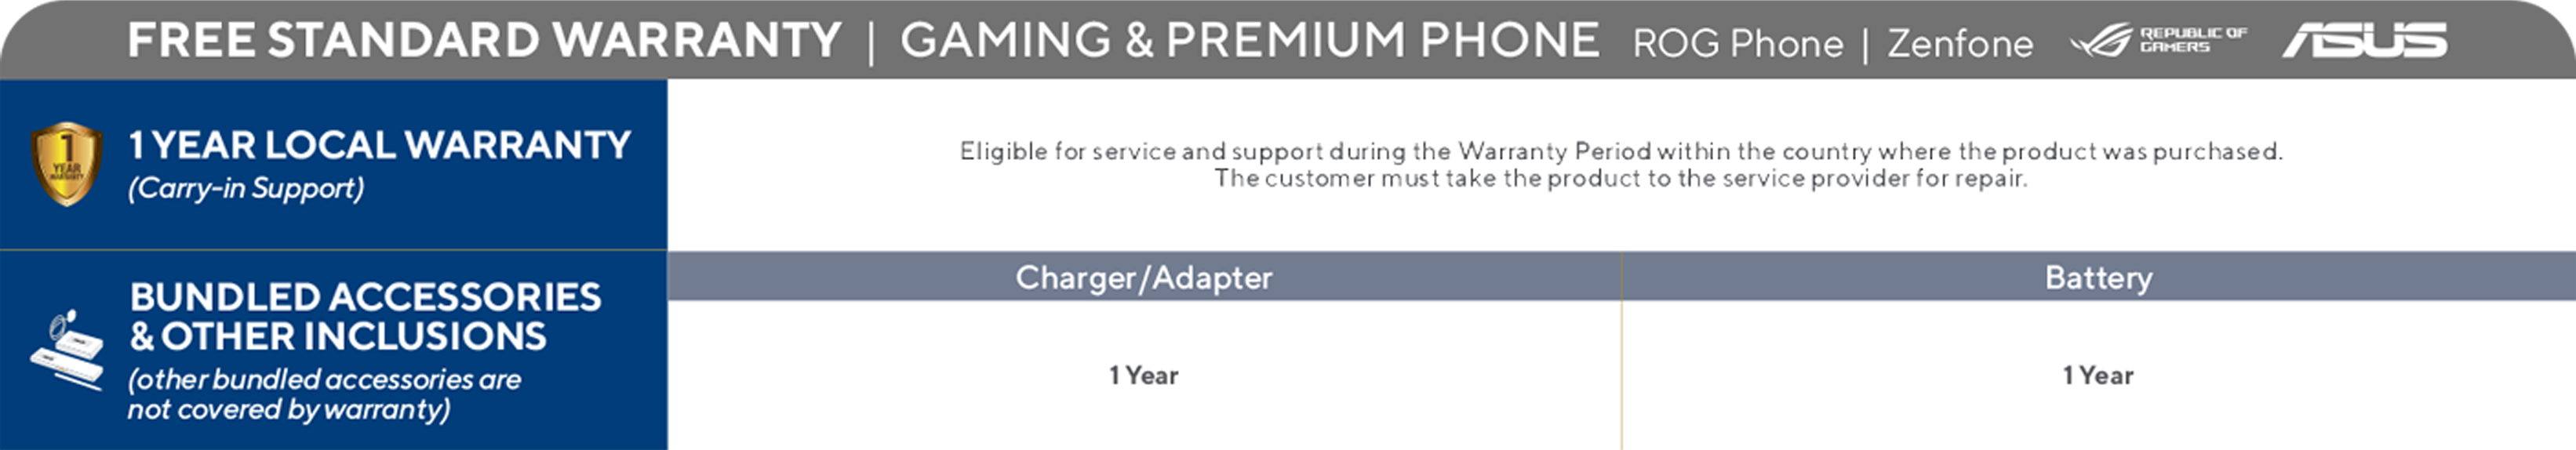 Free Standard Warranty | Gaming & Premium Phone